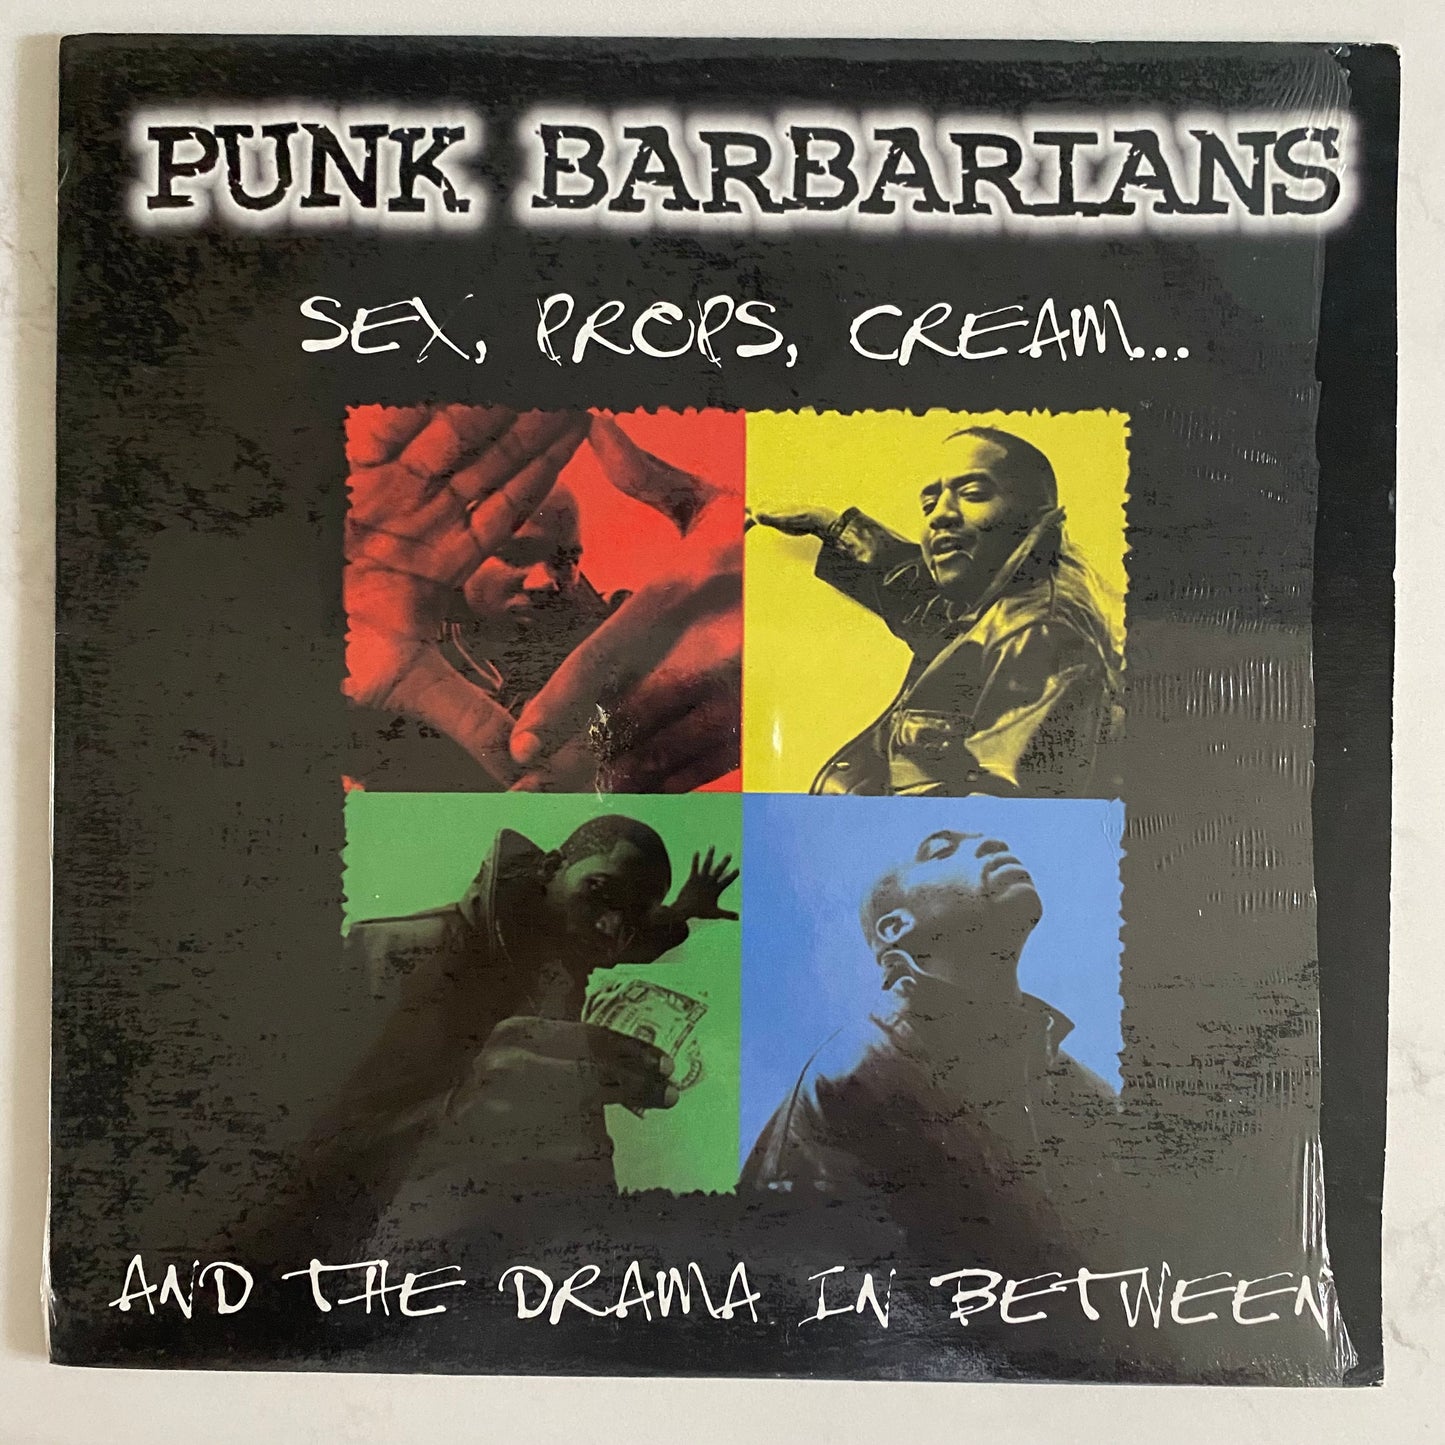 Punk Barbarians - Sex, Props, Cream... And The Drama In Between (LP, Album). HIP-HOP